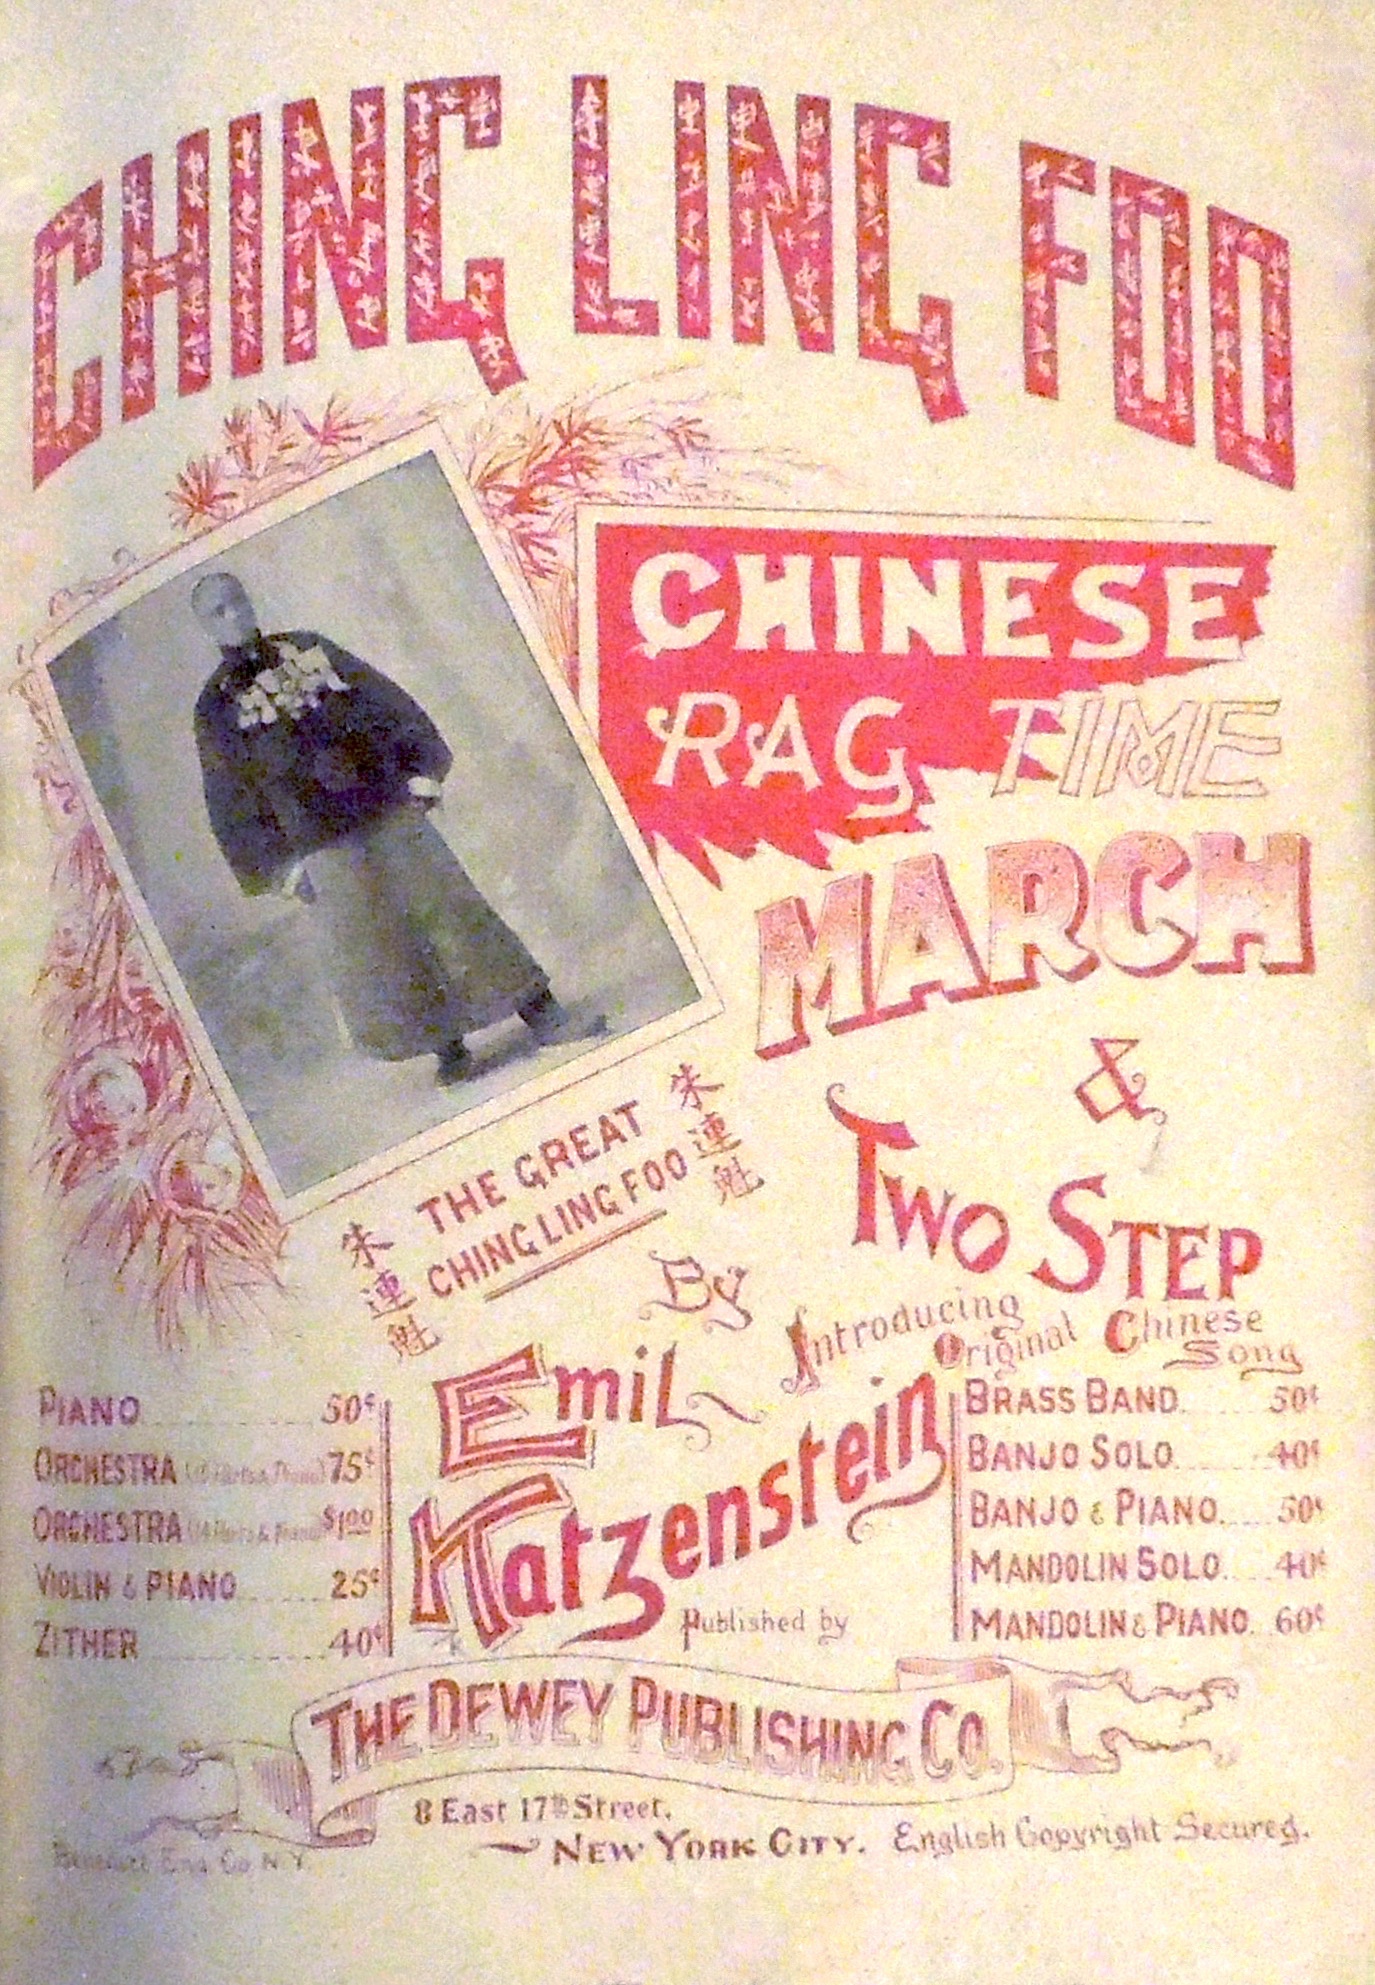 Ching Ling Foo Rag by Emil Katzenstein